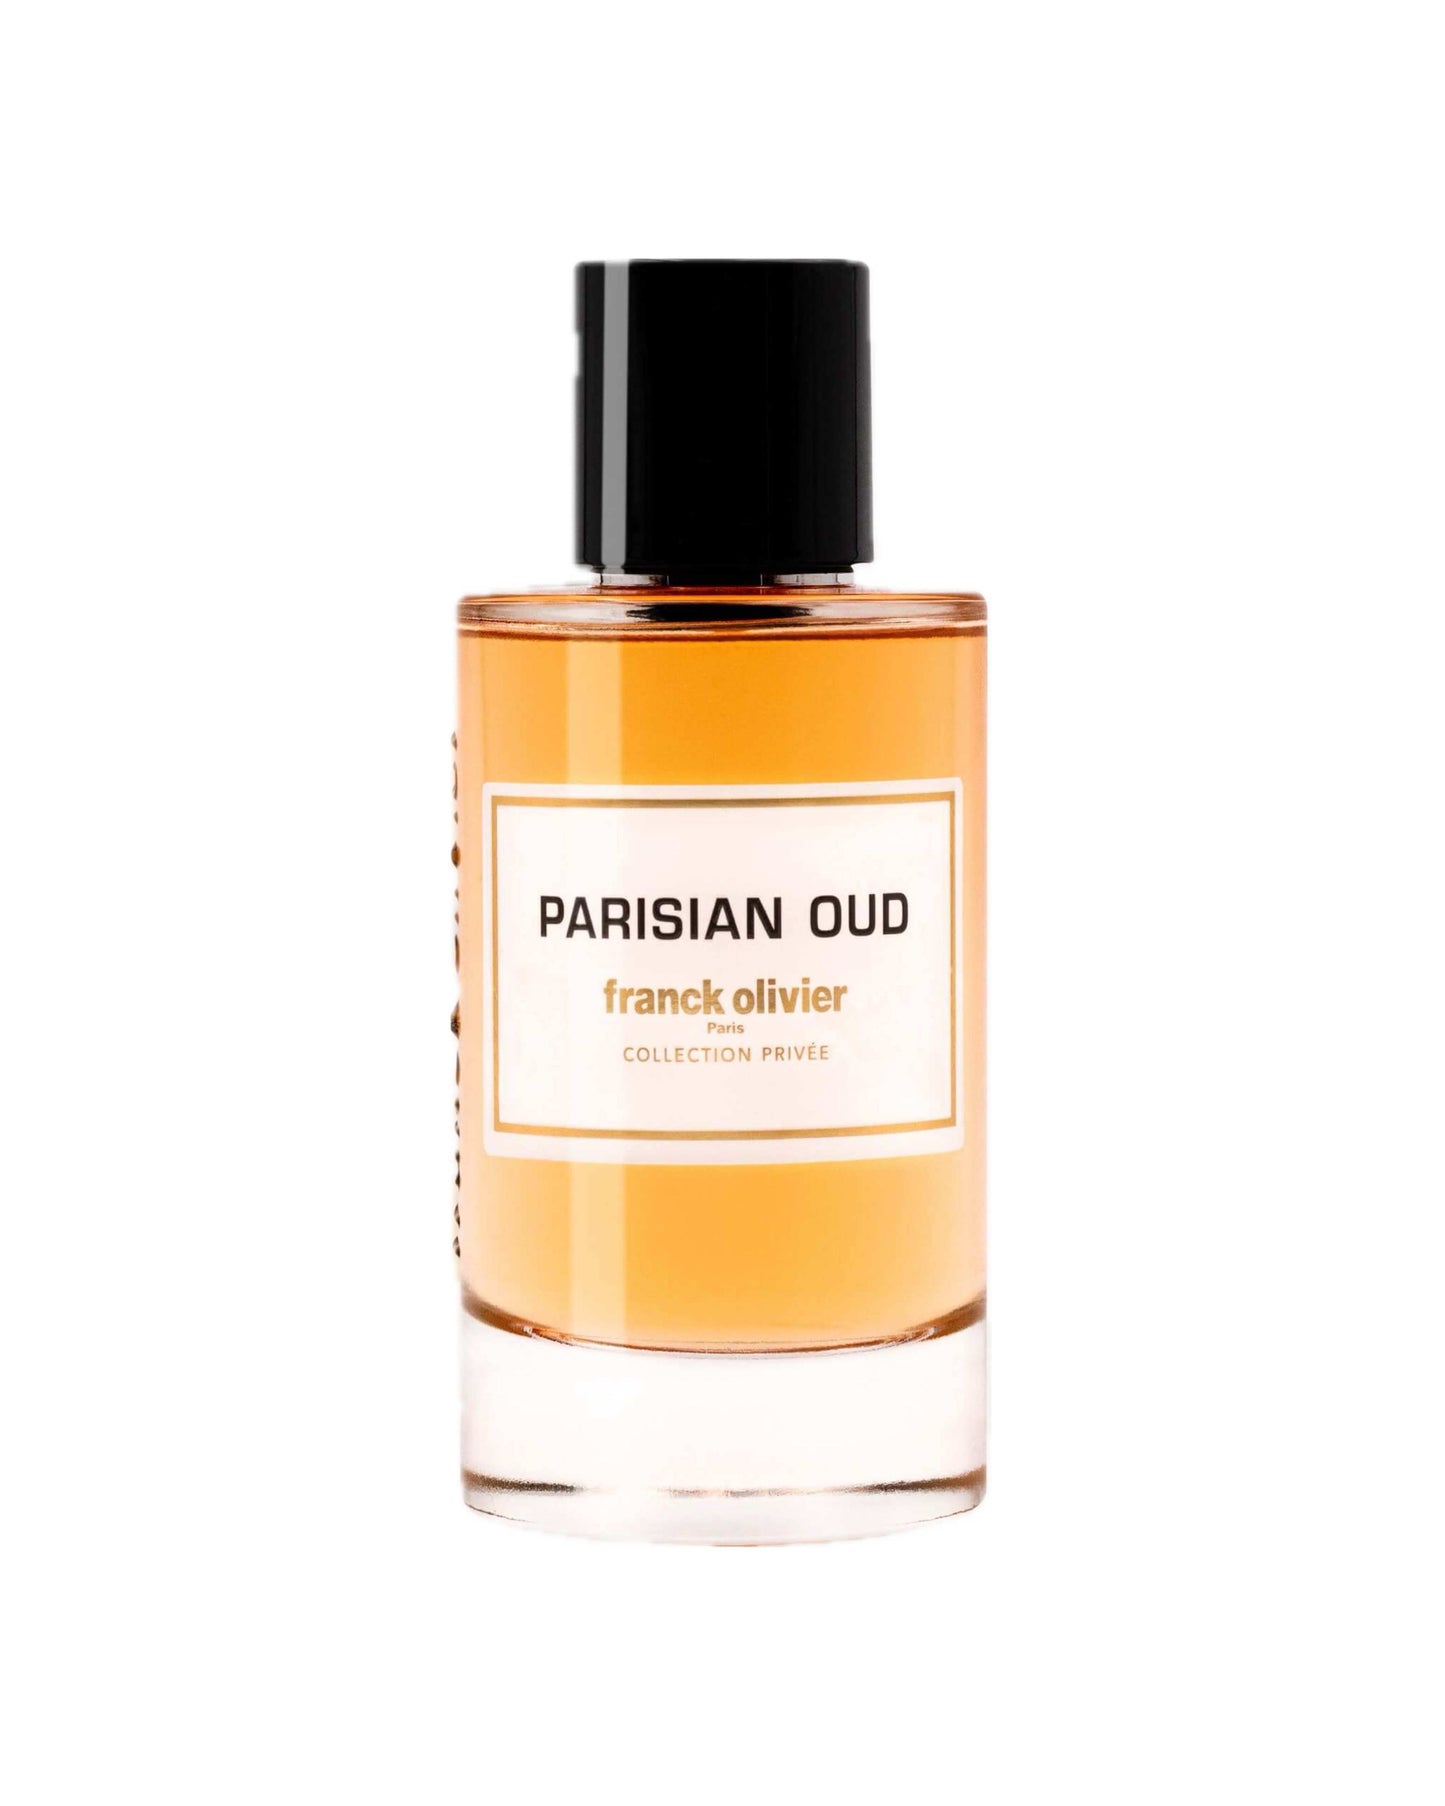 Franck Olivier – PARISIAN OUD–foryou–prix de foryou parfumurie en ligne–vente de parfum original au Maroc–prix de foryou parfum